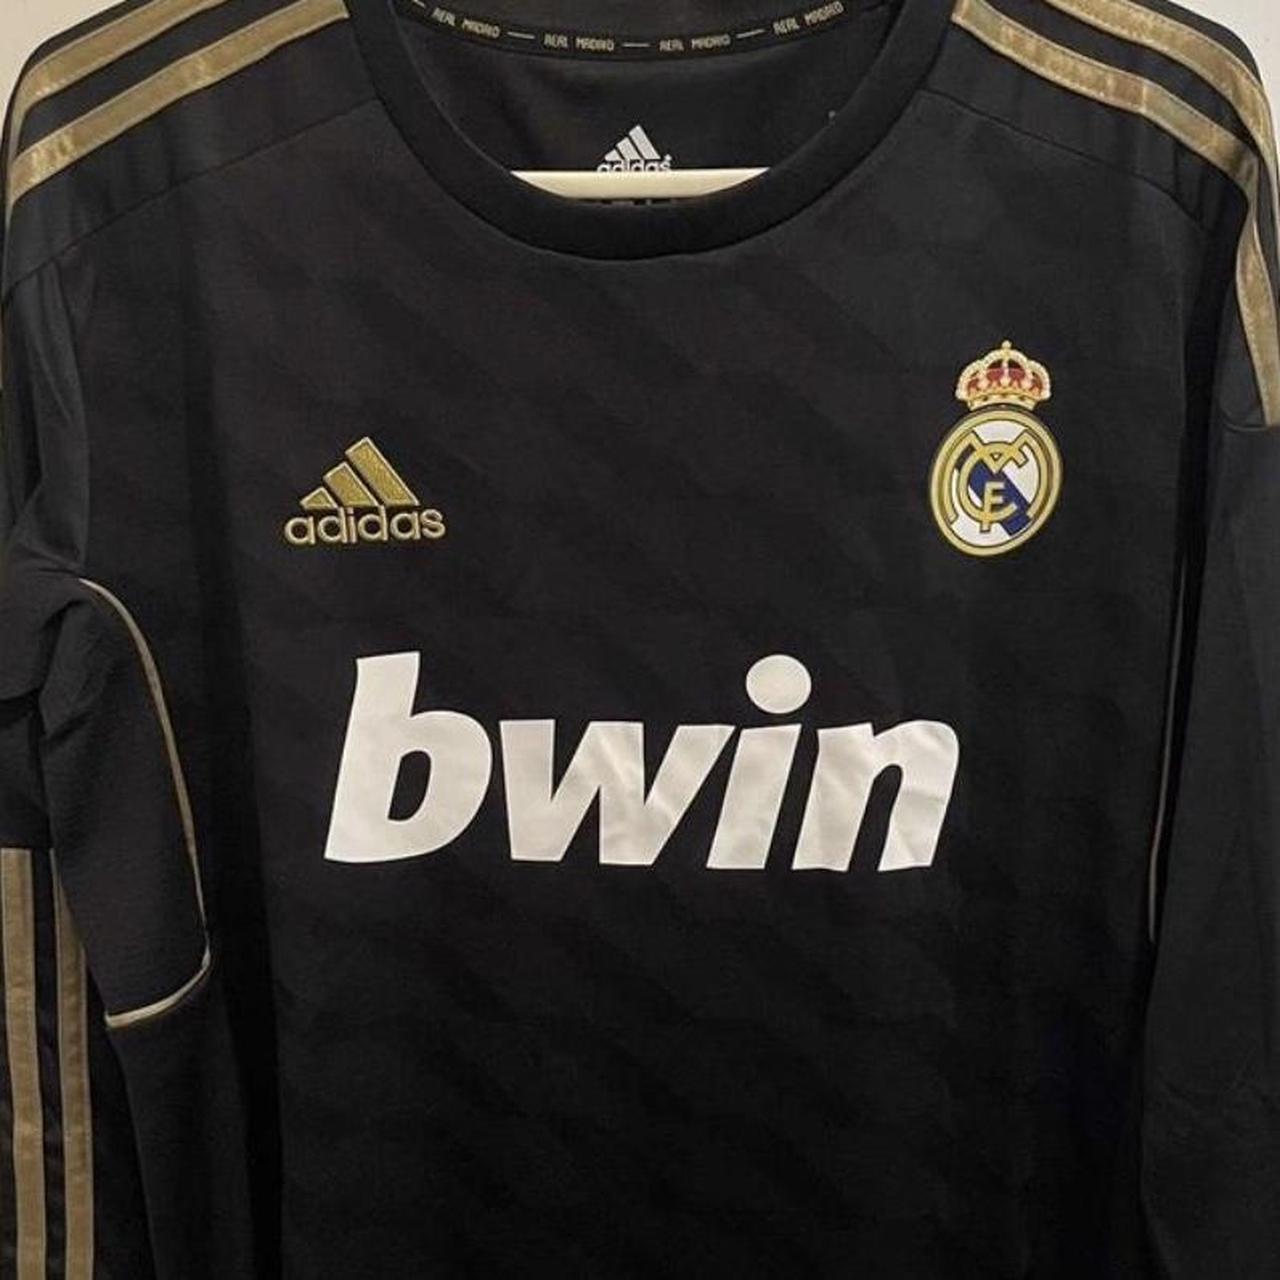 Real Madrid 2011/12 away kit ,Personalised with... - Depop